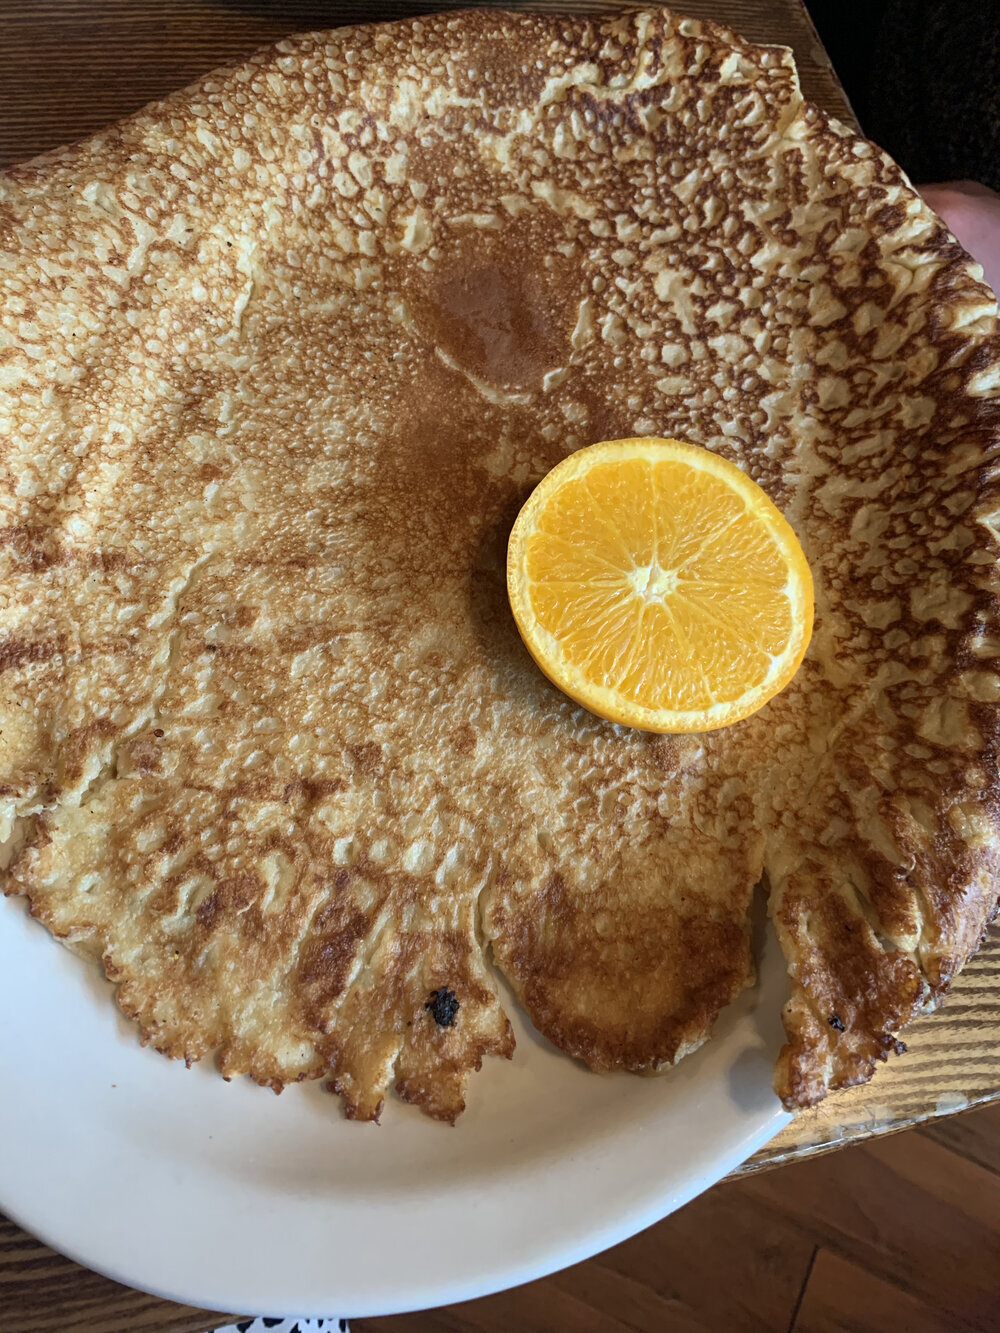 German pancake with lemon on top